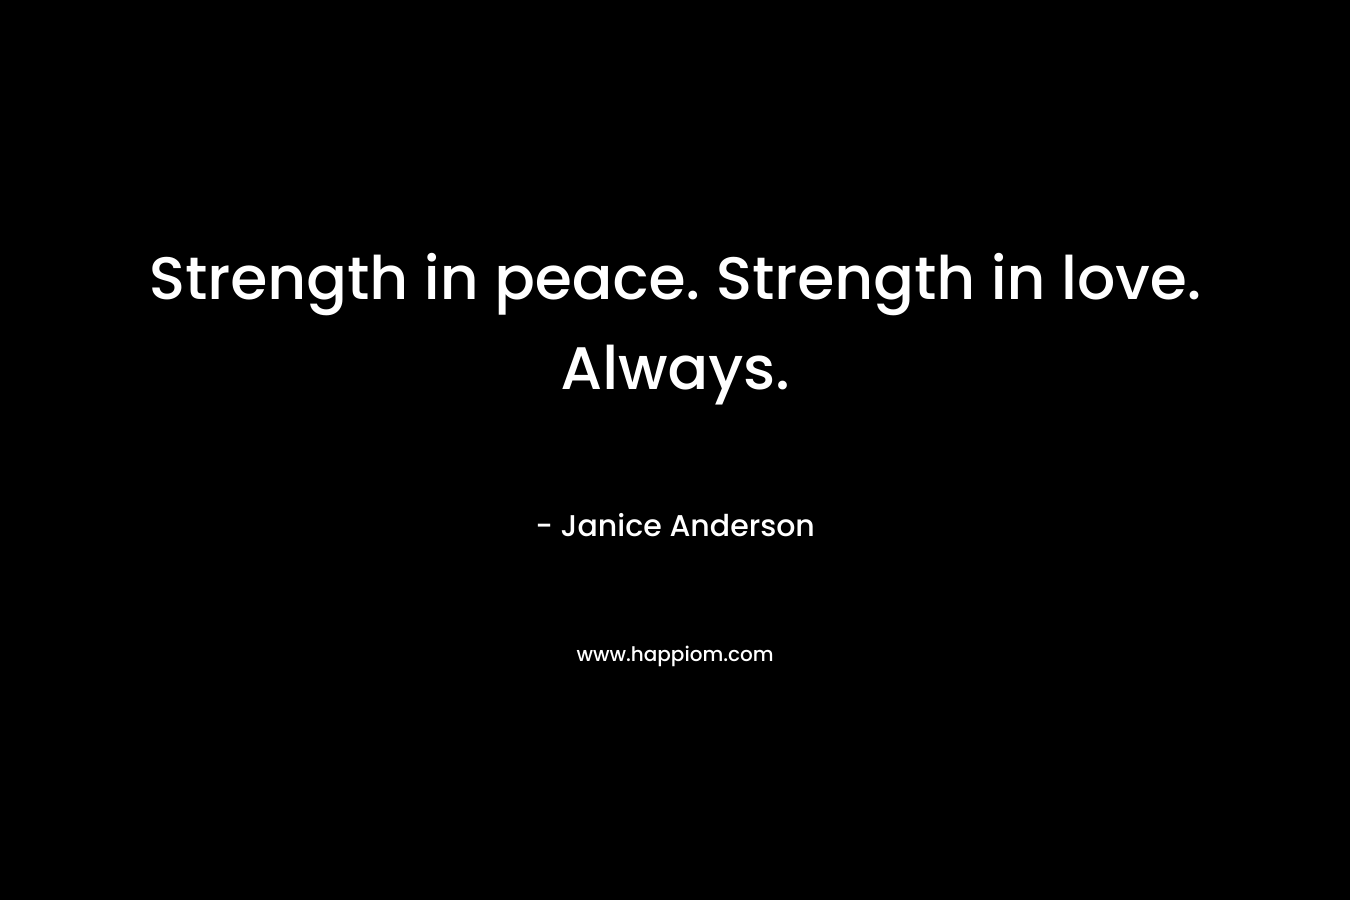 Strength in peace. Strength in love. Always.